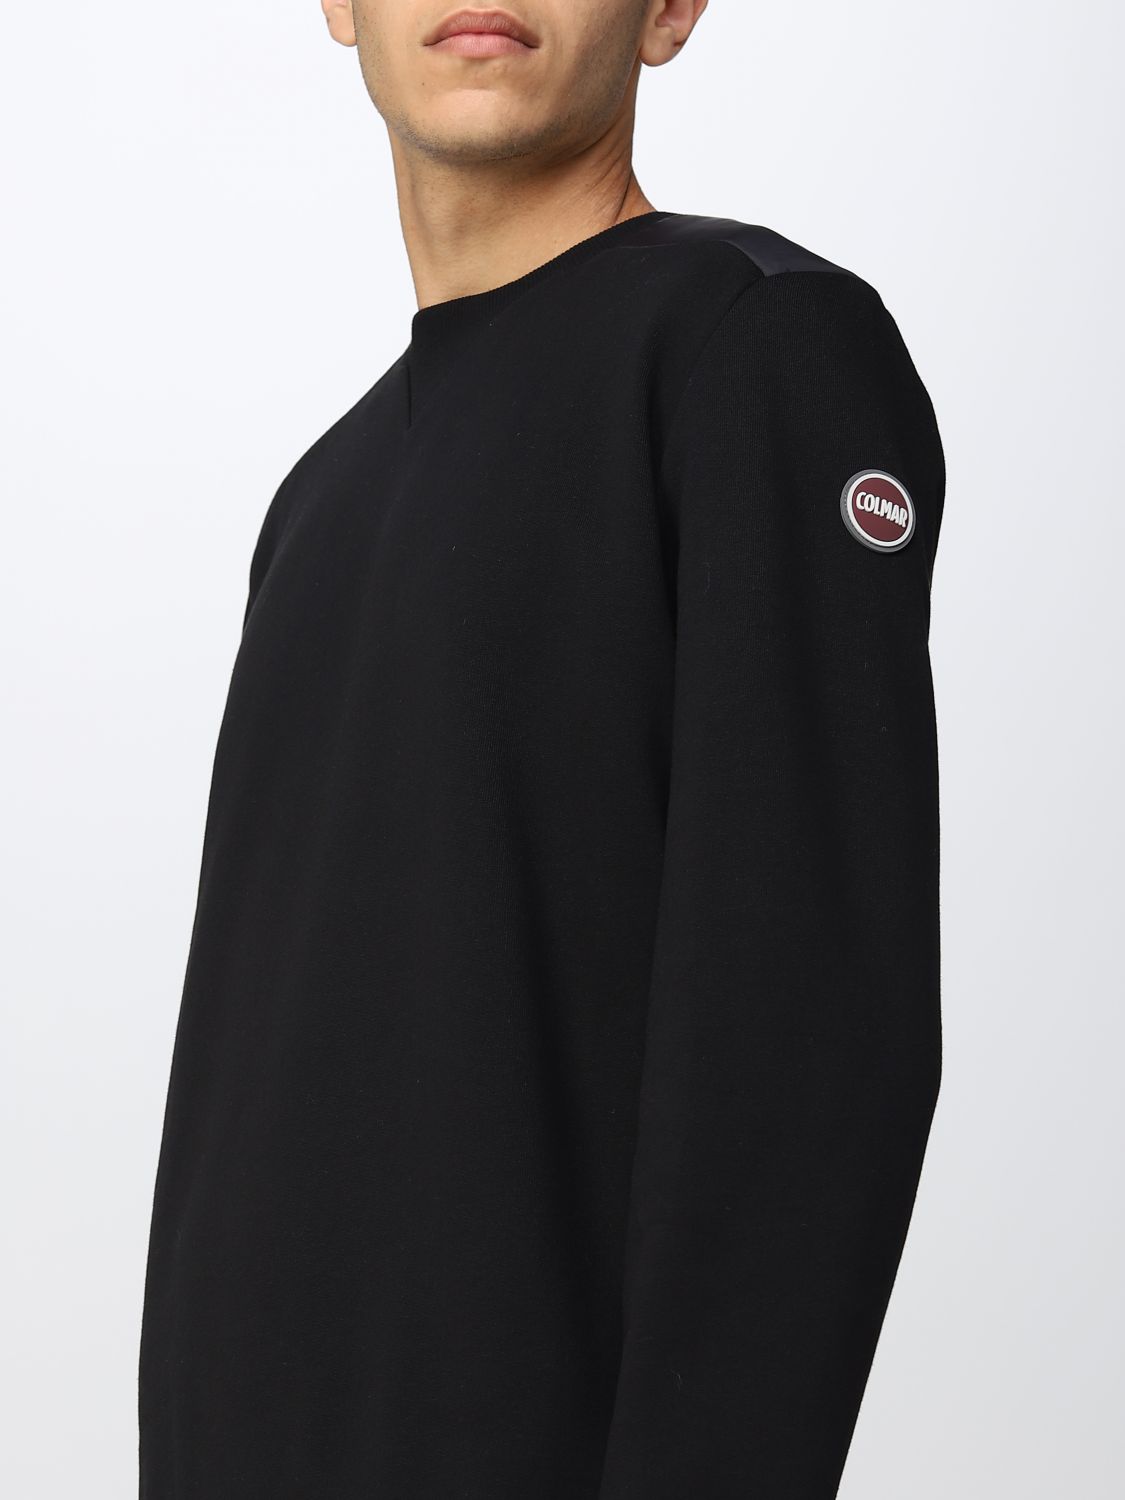 COLMAR: sweatshirt for man - Black | Colmar sweatshirt 82899UX online ...